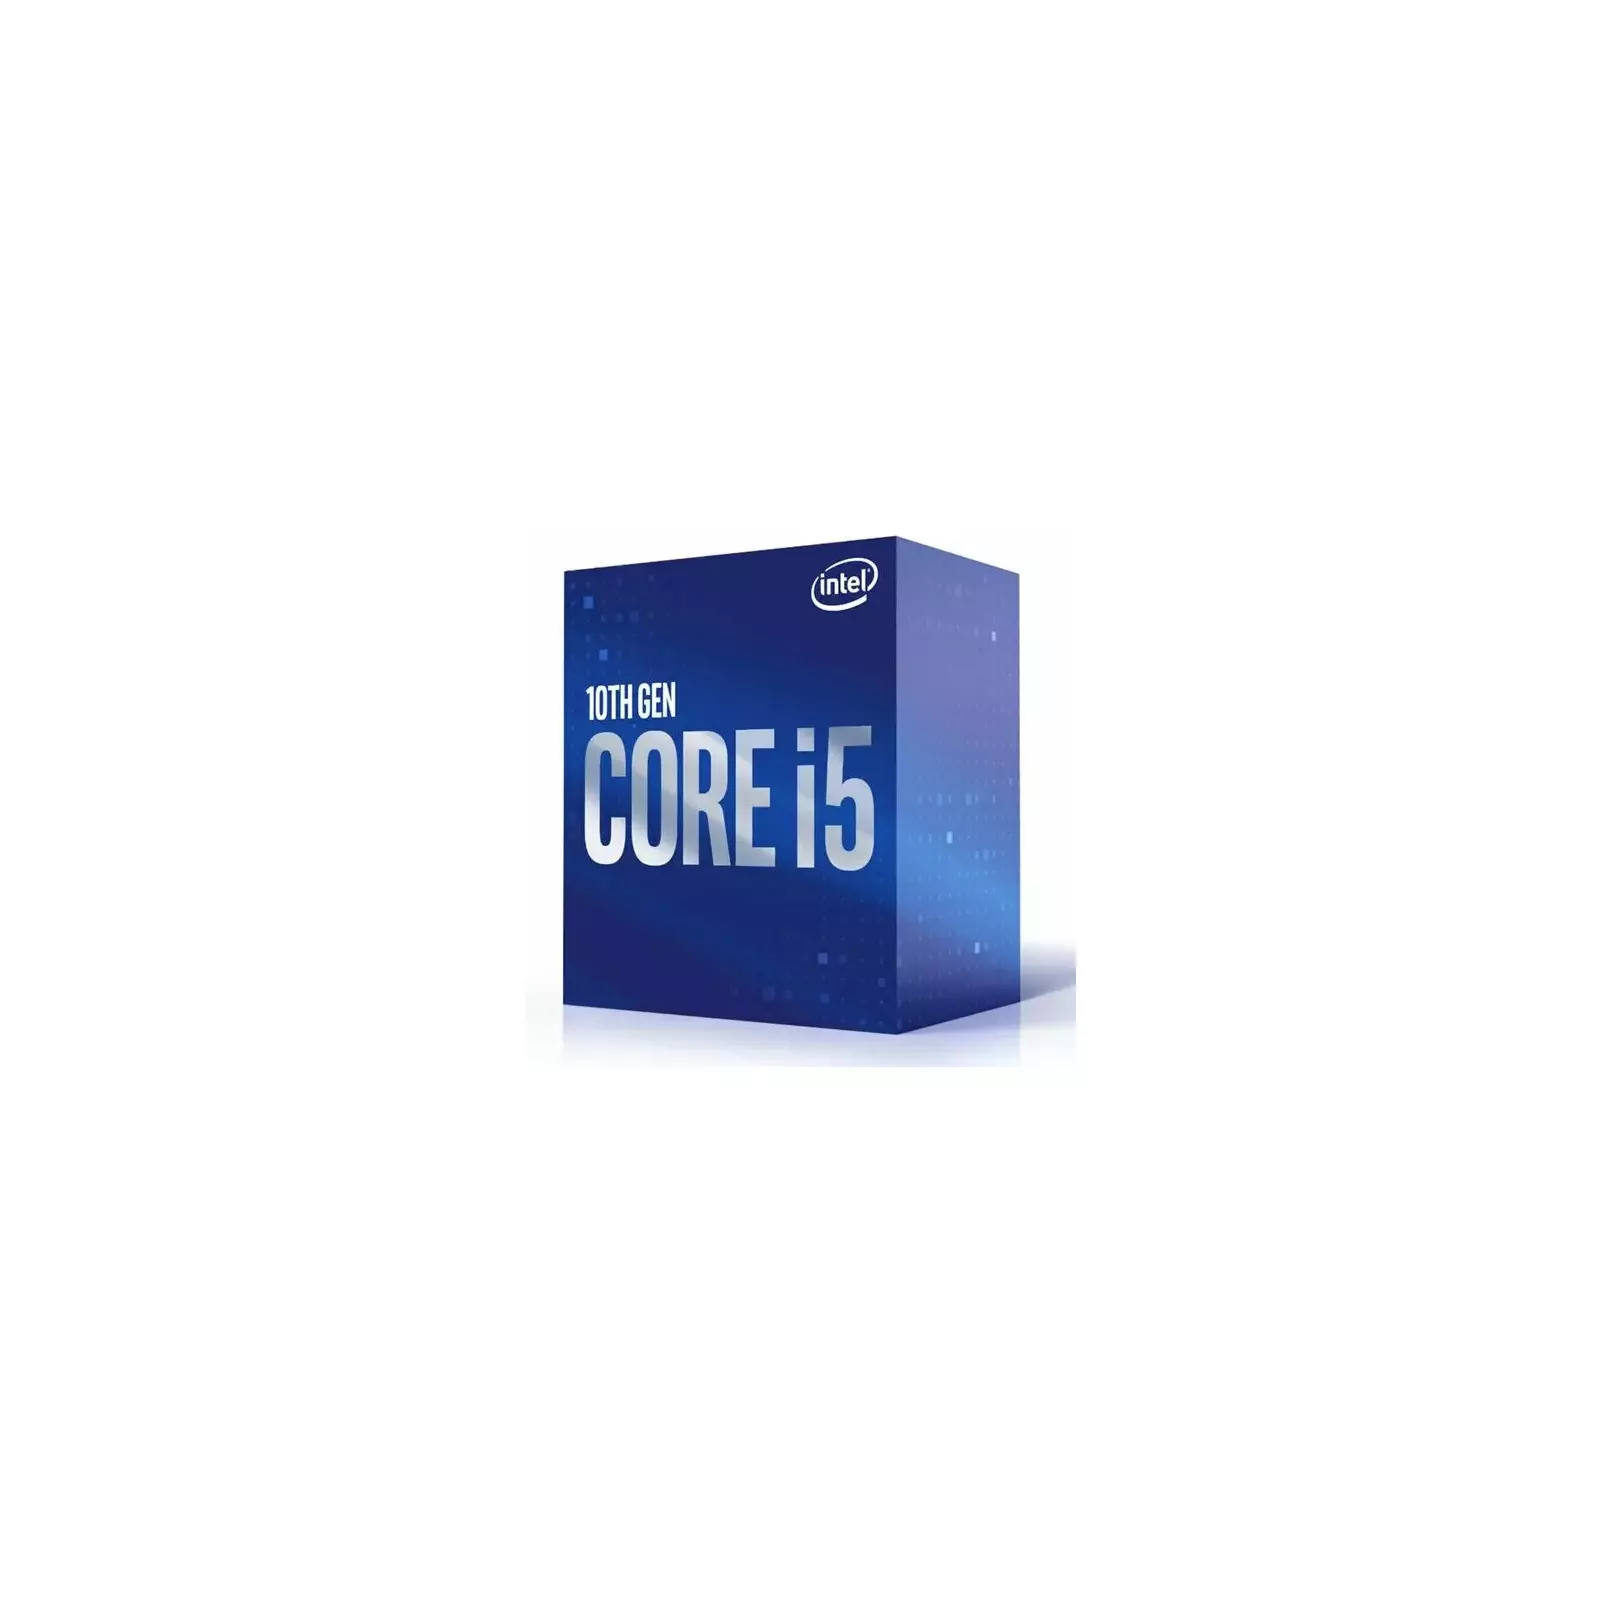 Intel Core i5-10500. Processor family: 10th gen Intel® Core™ i5, Processor  frequency: 3.1 GHz, Processor socket: LGA 1200 (Socket H5). Memory  channels: Dual-channel, Maximum internal memory supported by processor: 128  GB, Memory